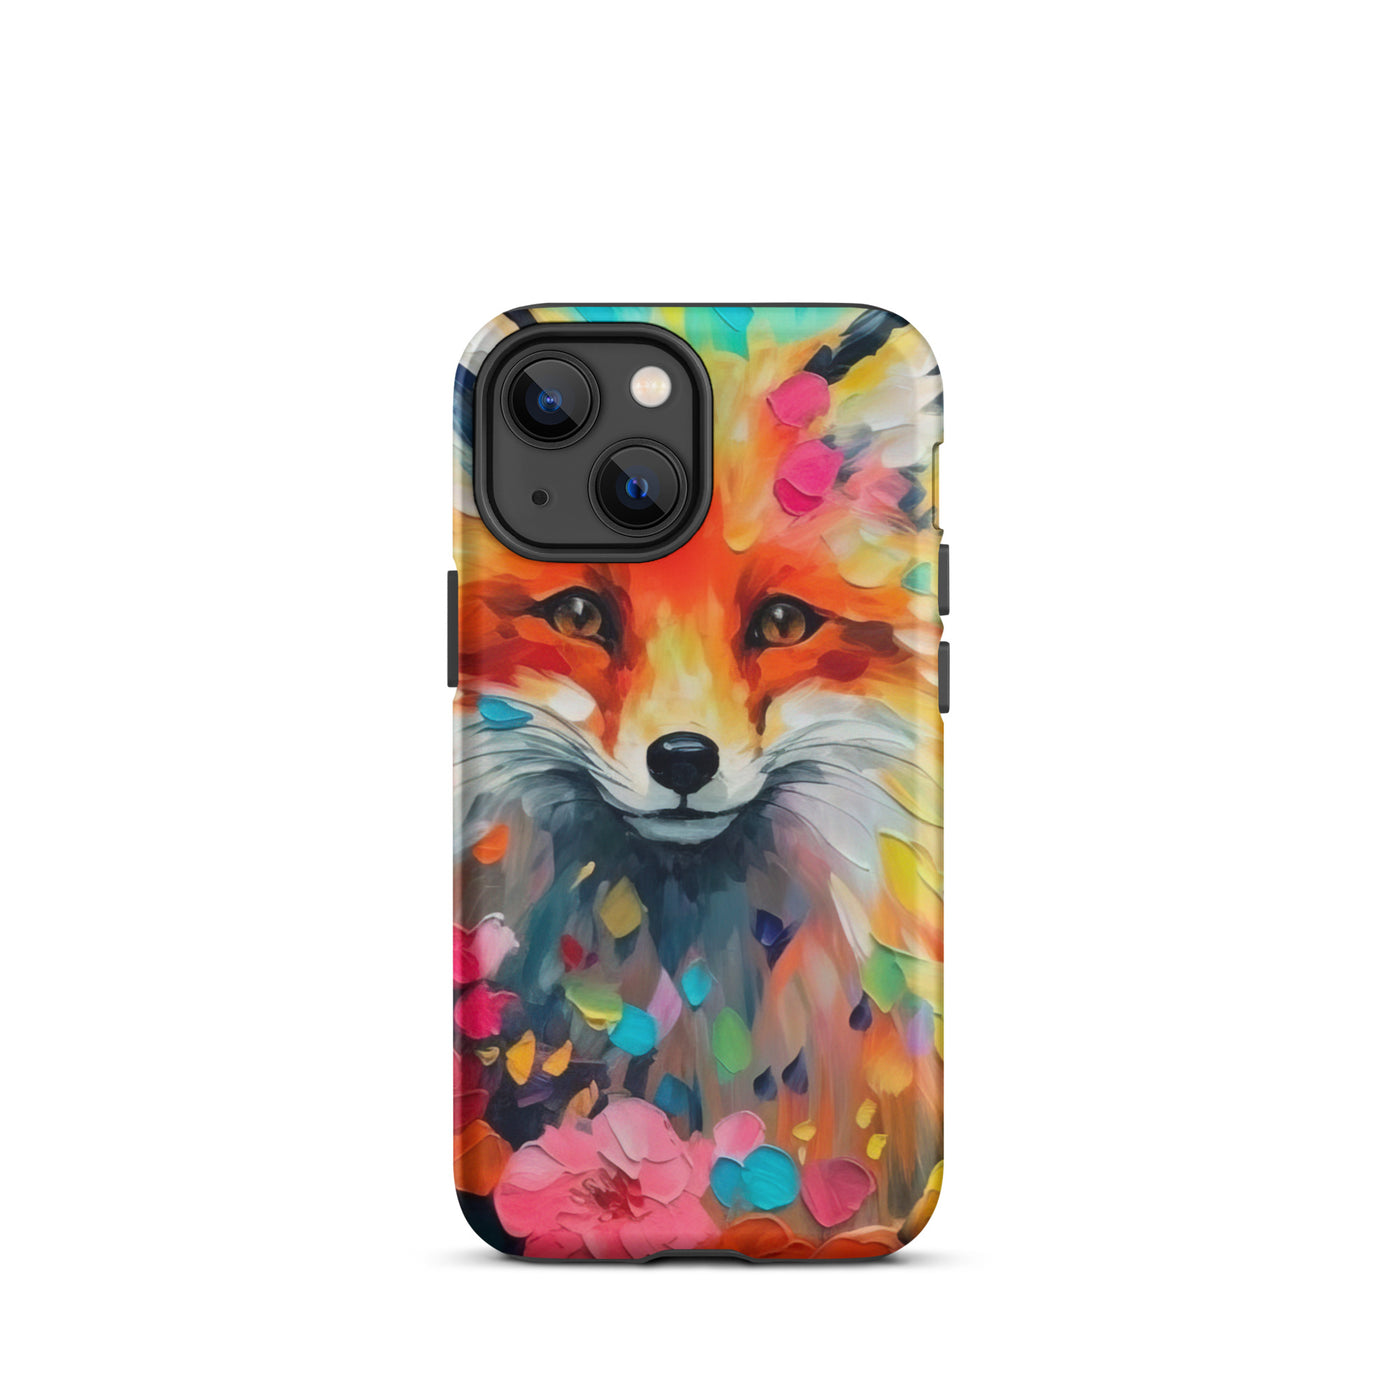 Schöner Fuchs im Blumenfeld - Farbige Malerei - iPhone Schutzhülle (robust) camping xxx iPhone 13 mini